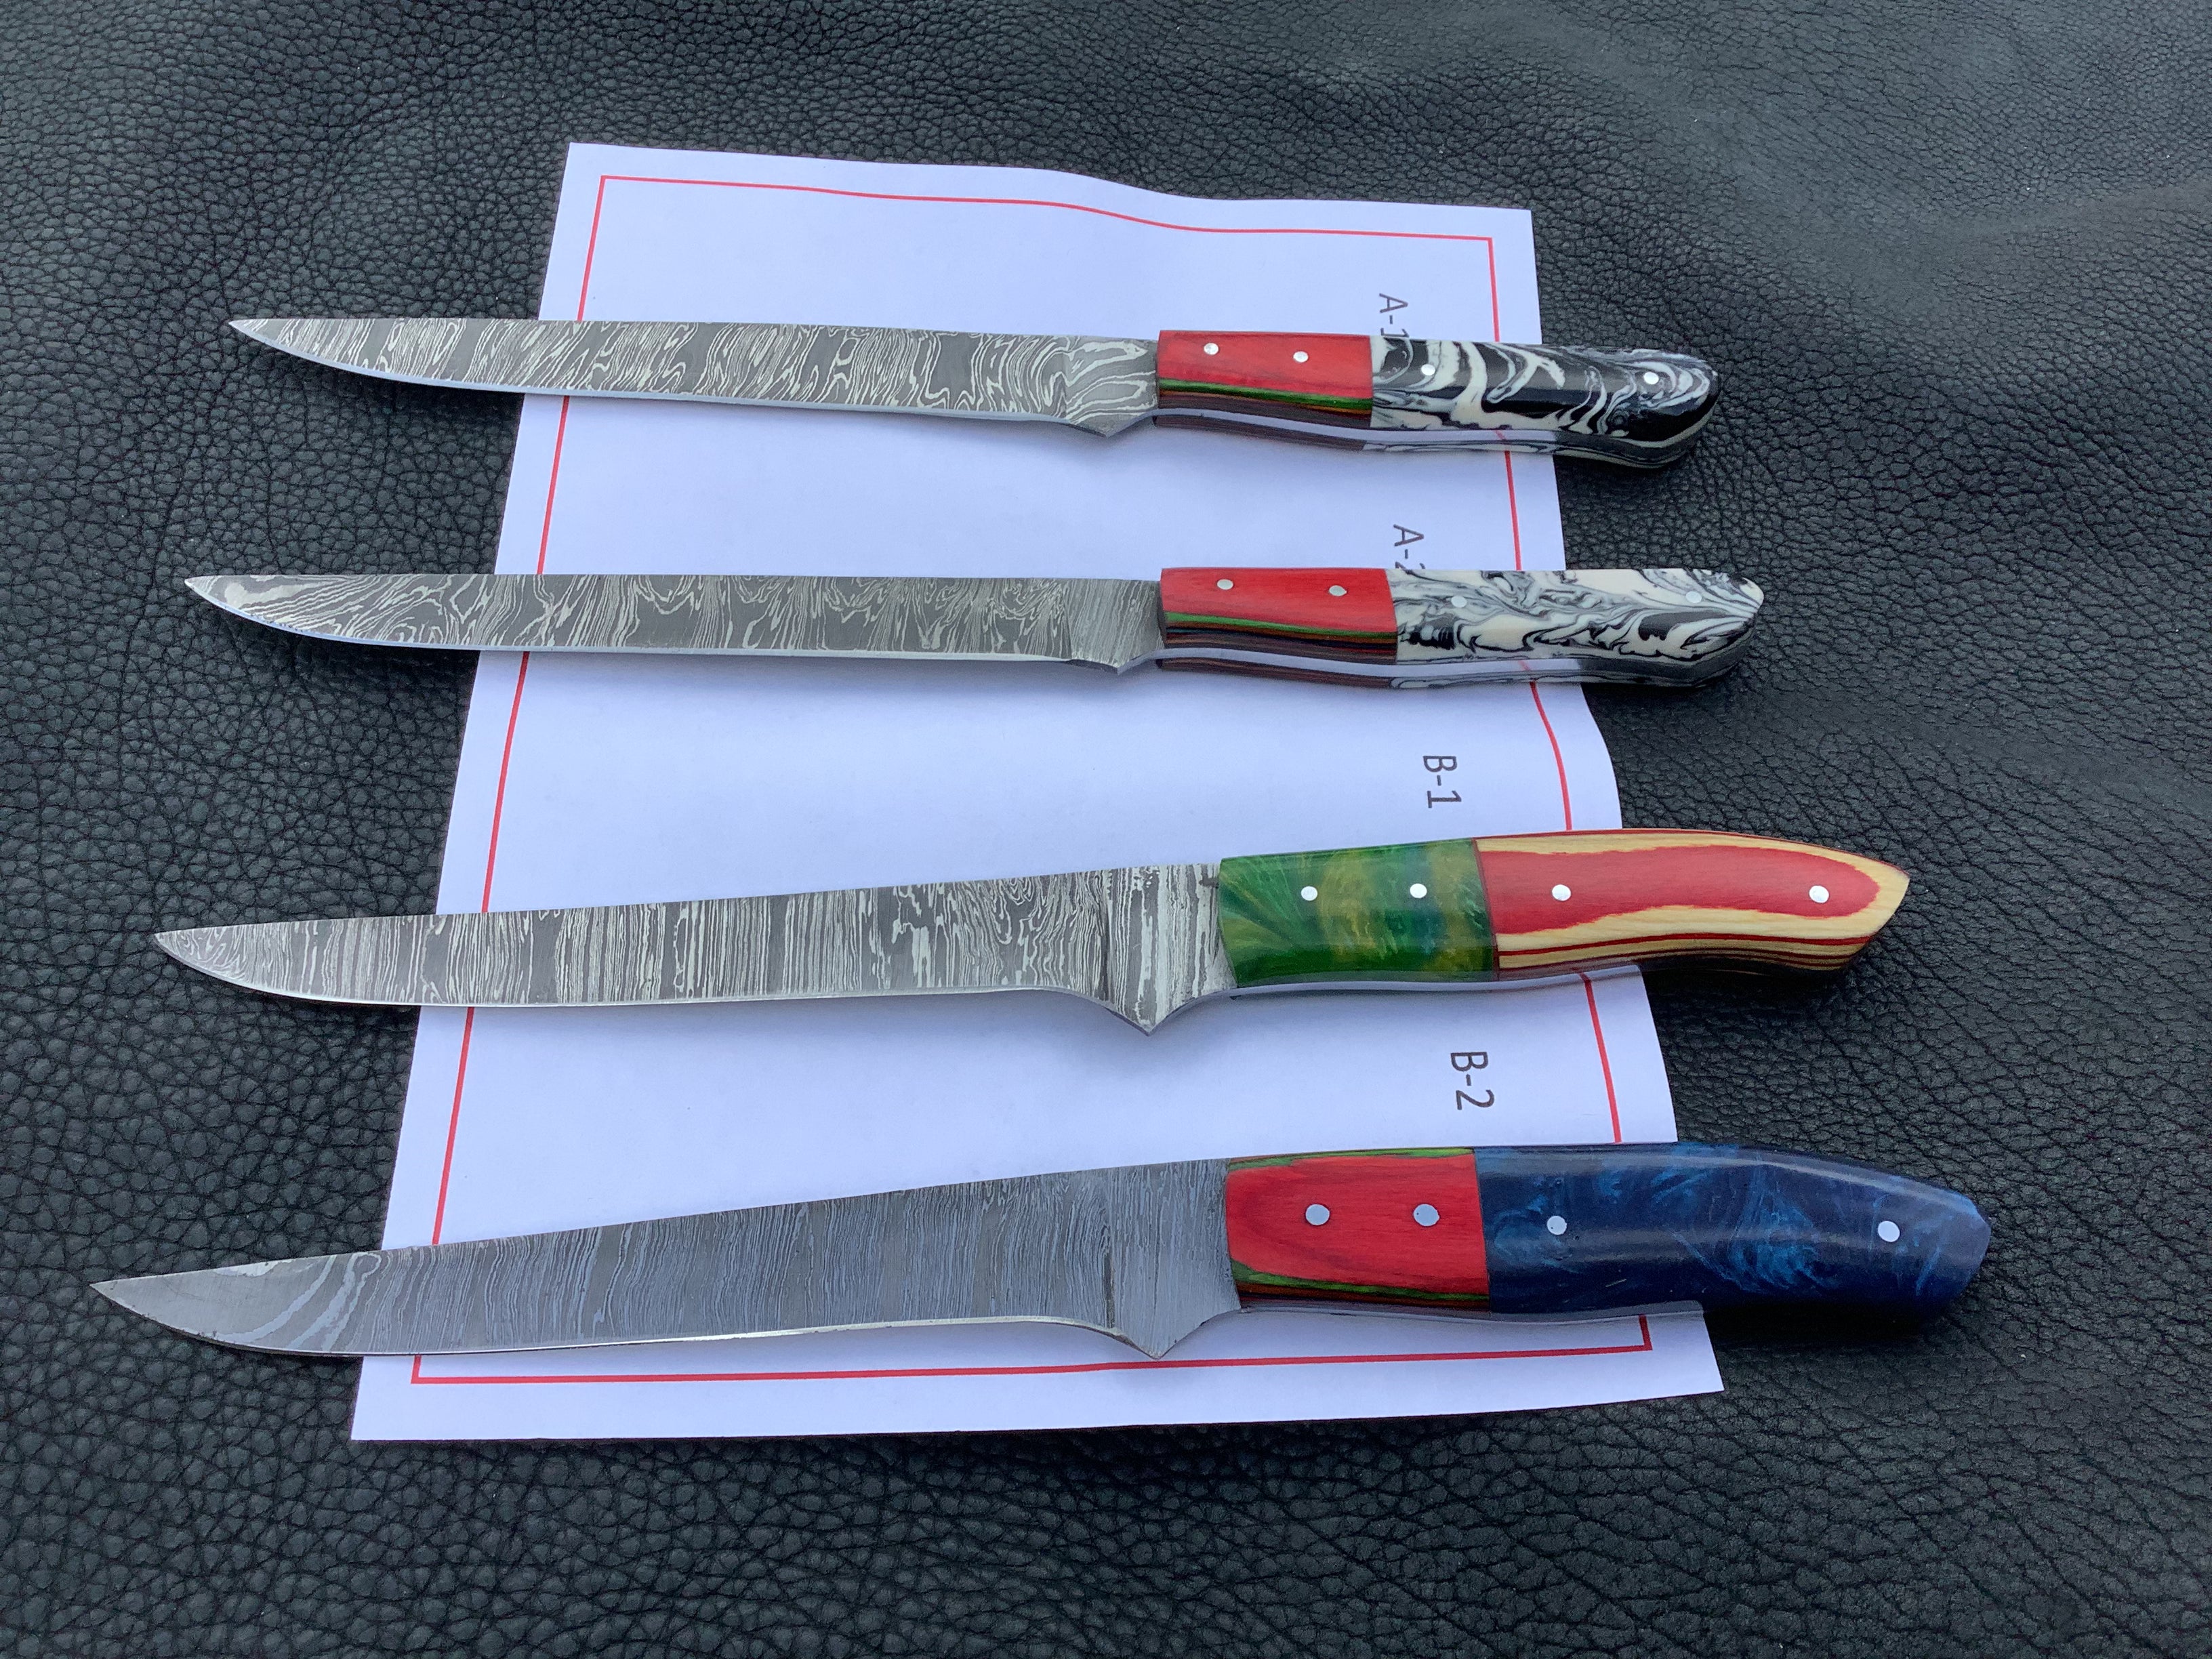 Damascus steel fileting knives